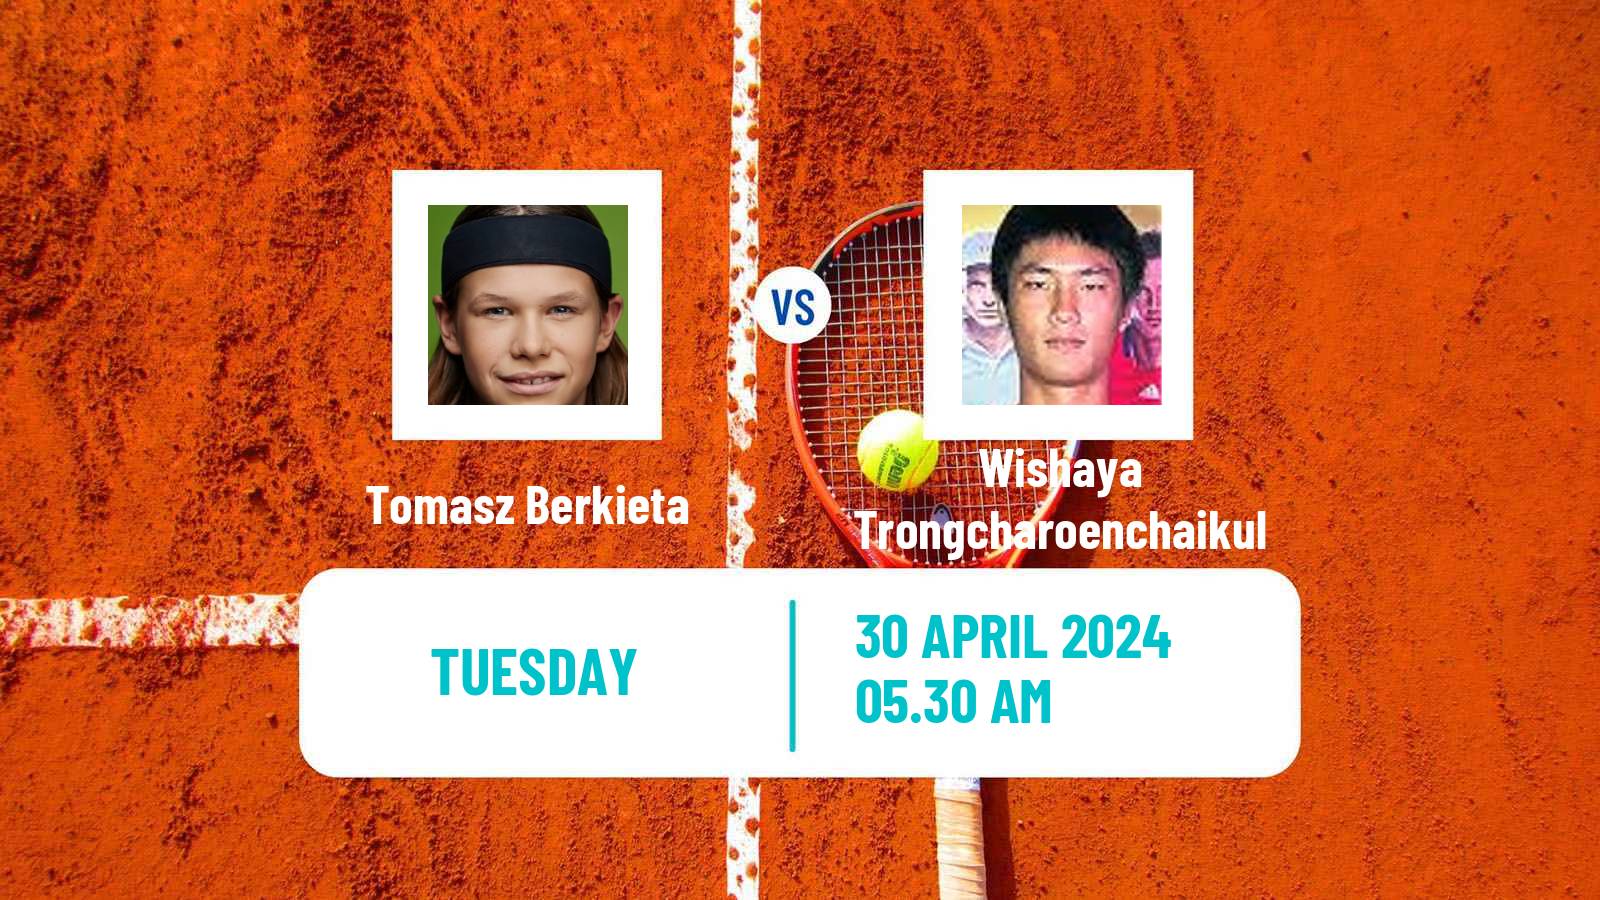 Tennis ITF M15 Antalya 13 Men 2024 Tomasz Berkieta - Wishaya Trongcharoenchaikul